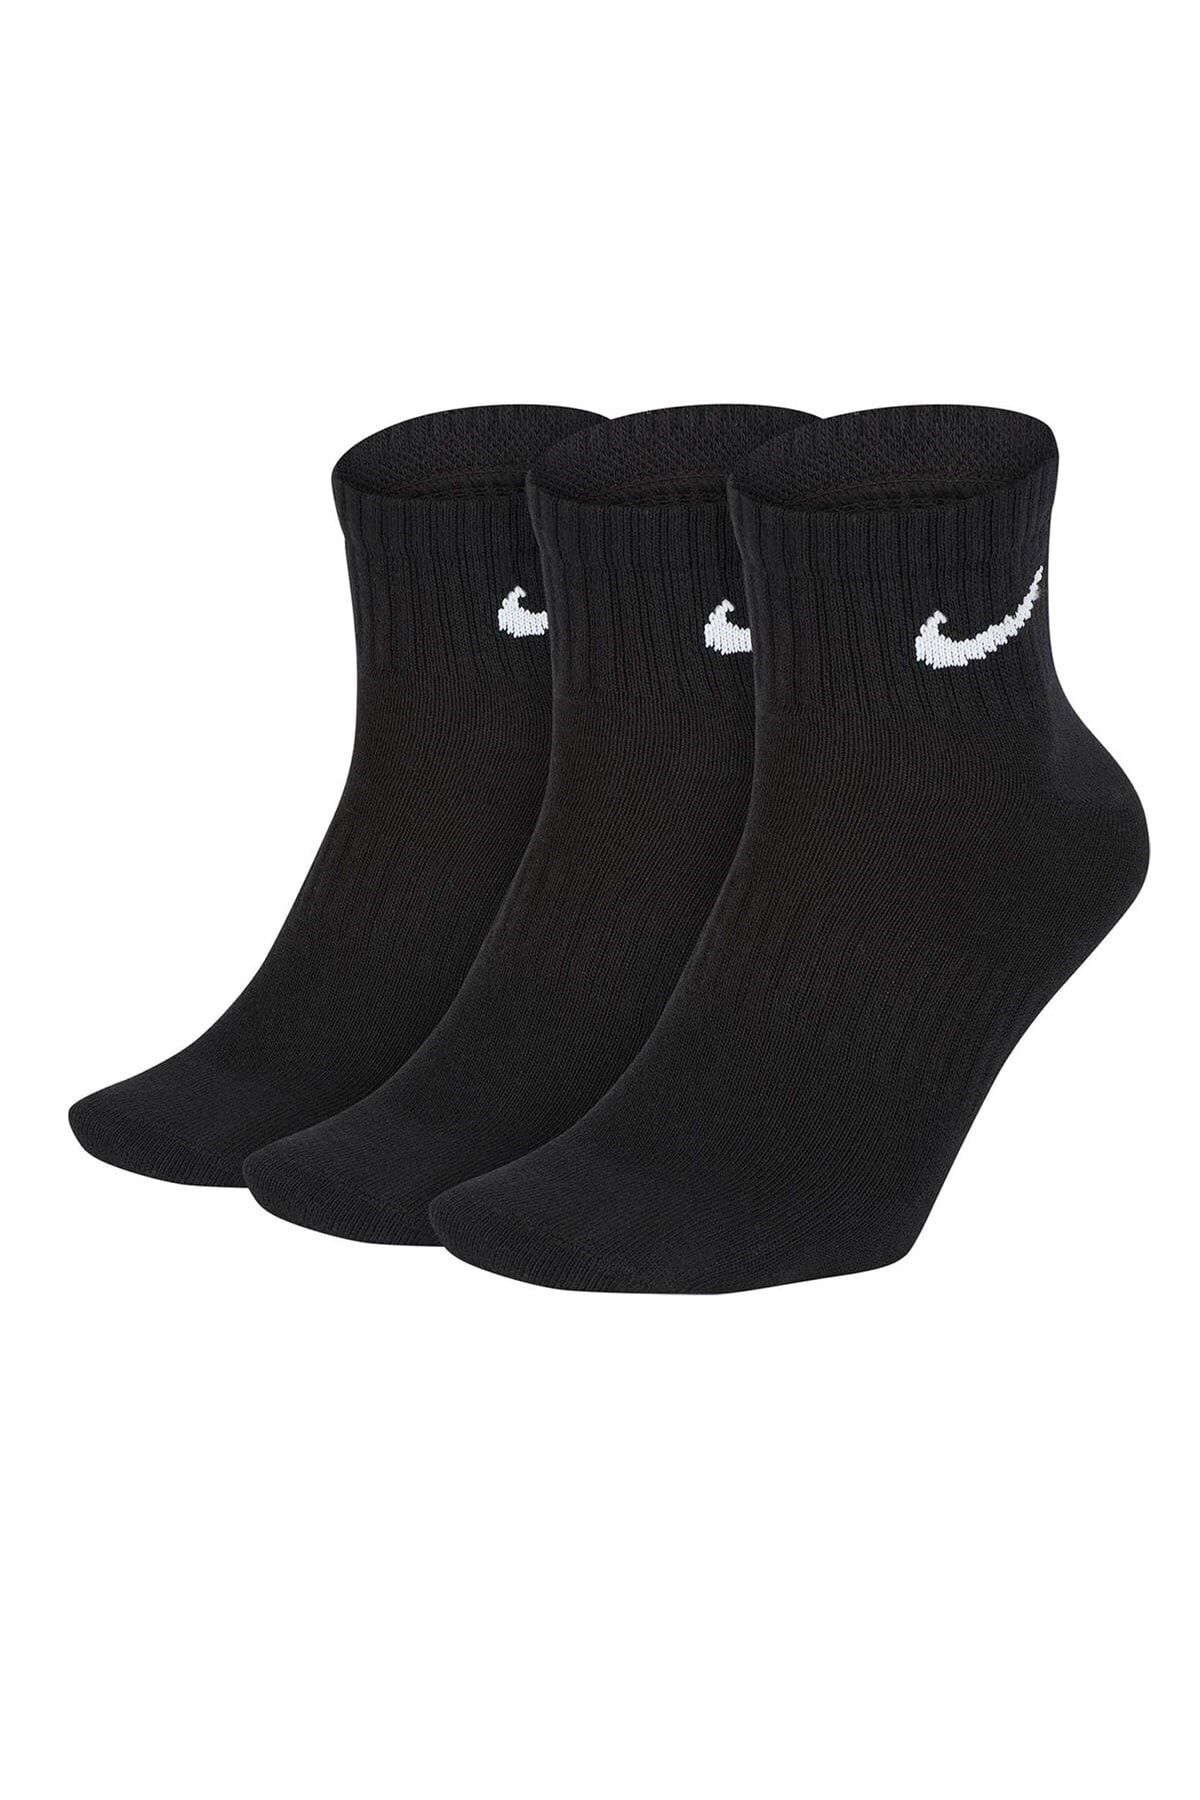 Nike Everyday Lightweight Ankle Çorap Sx7677-010